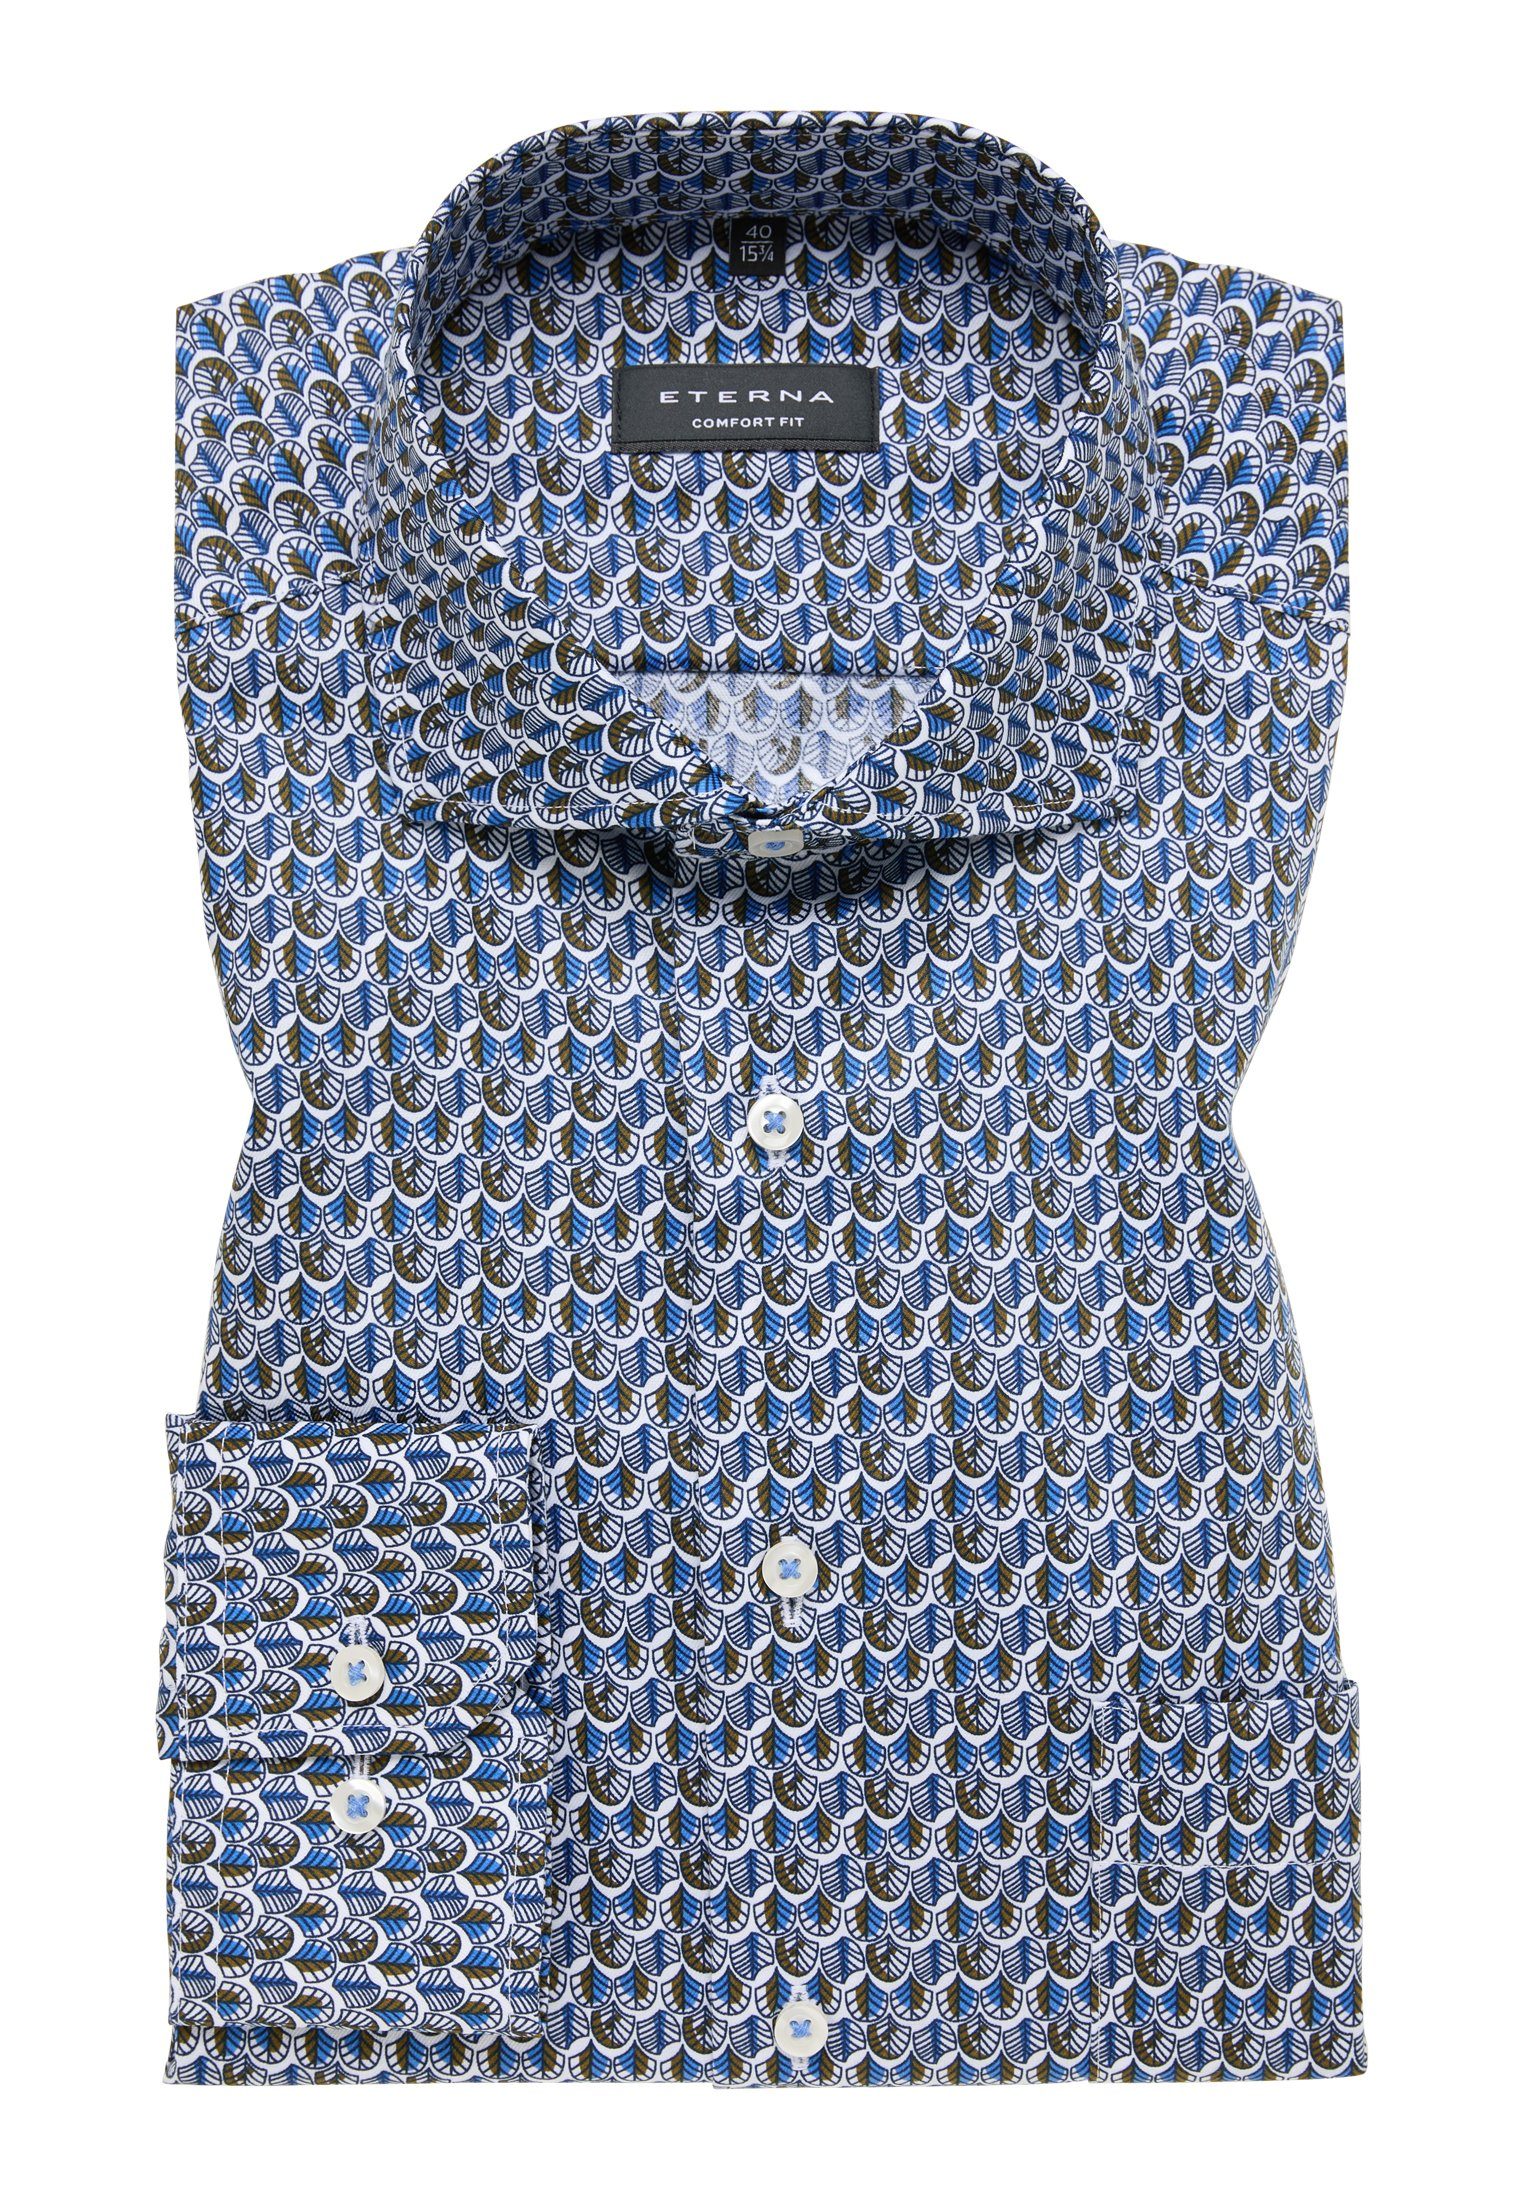 Eterna blau FIT COMFORT Langarmhemd